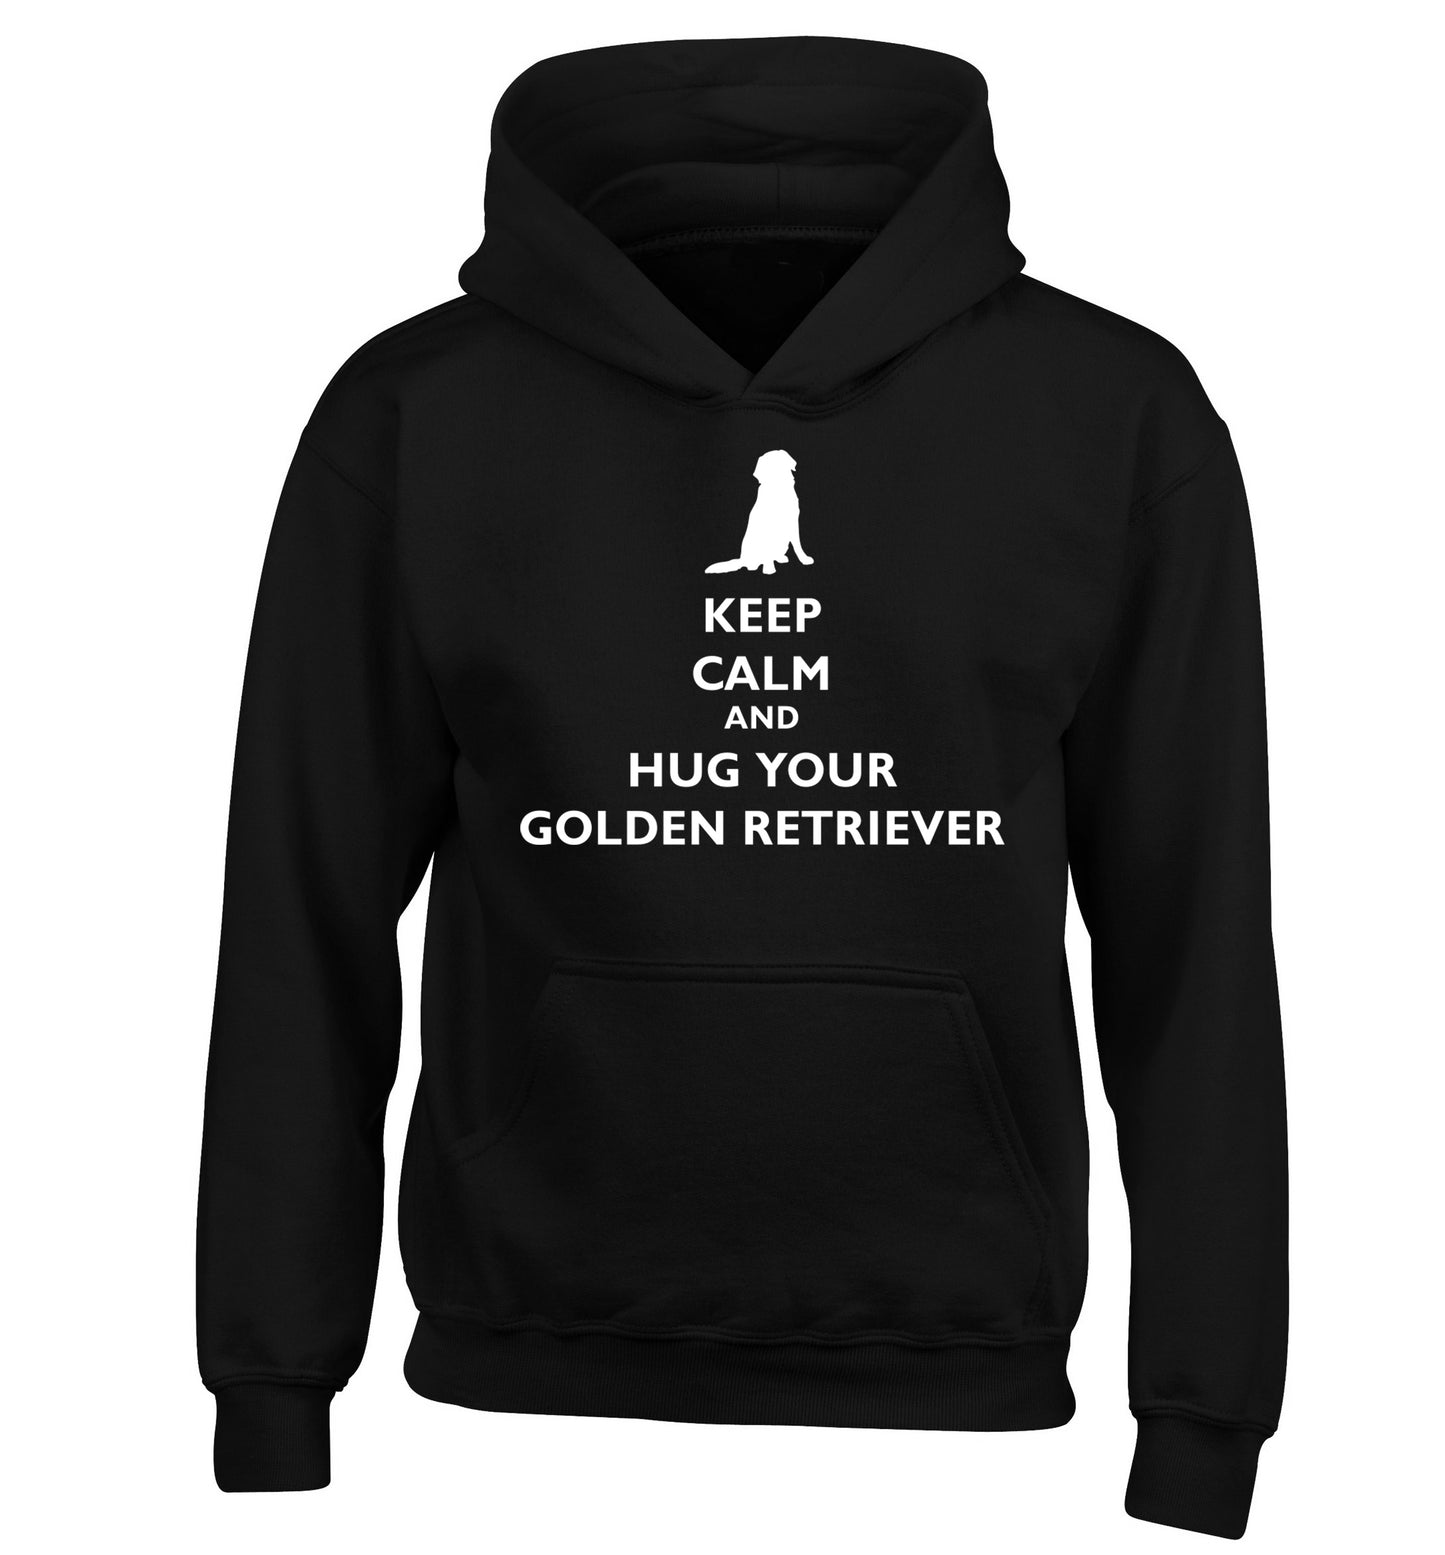 Keep calm and hug your golden retriever children's black hoodie 12-13 Years